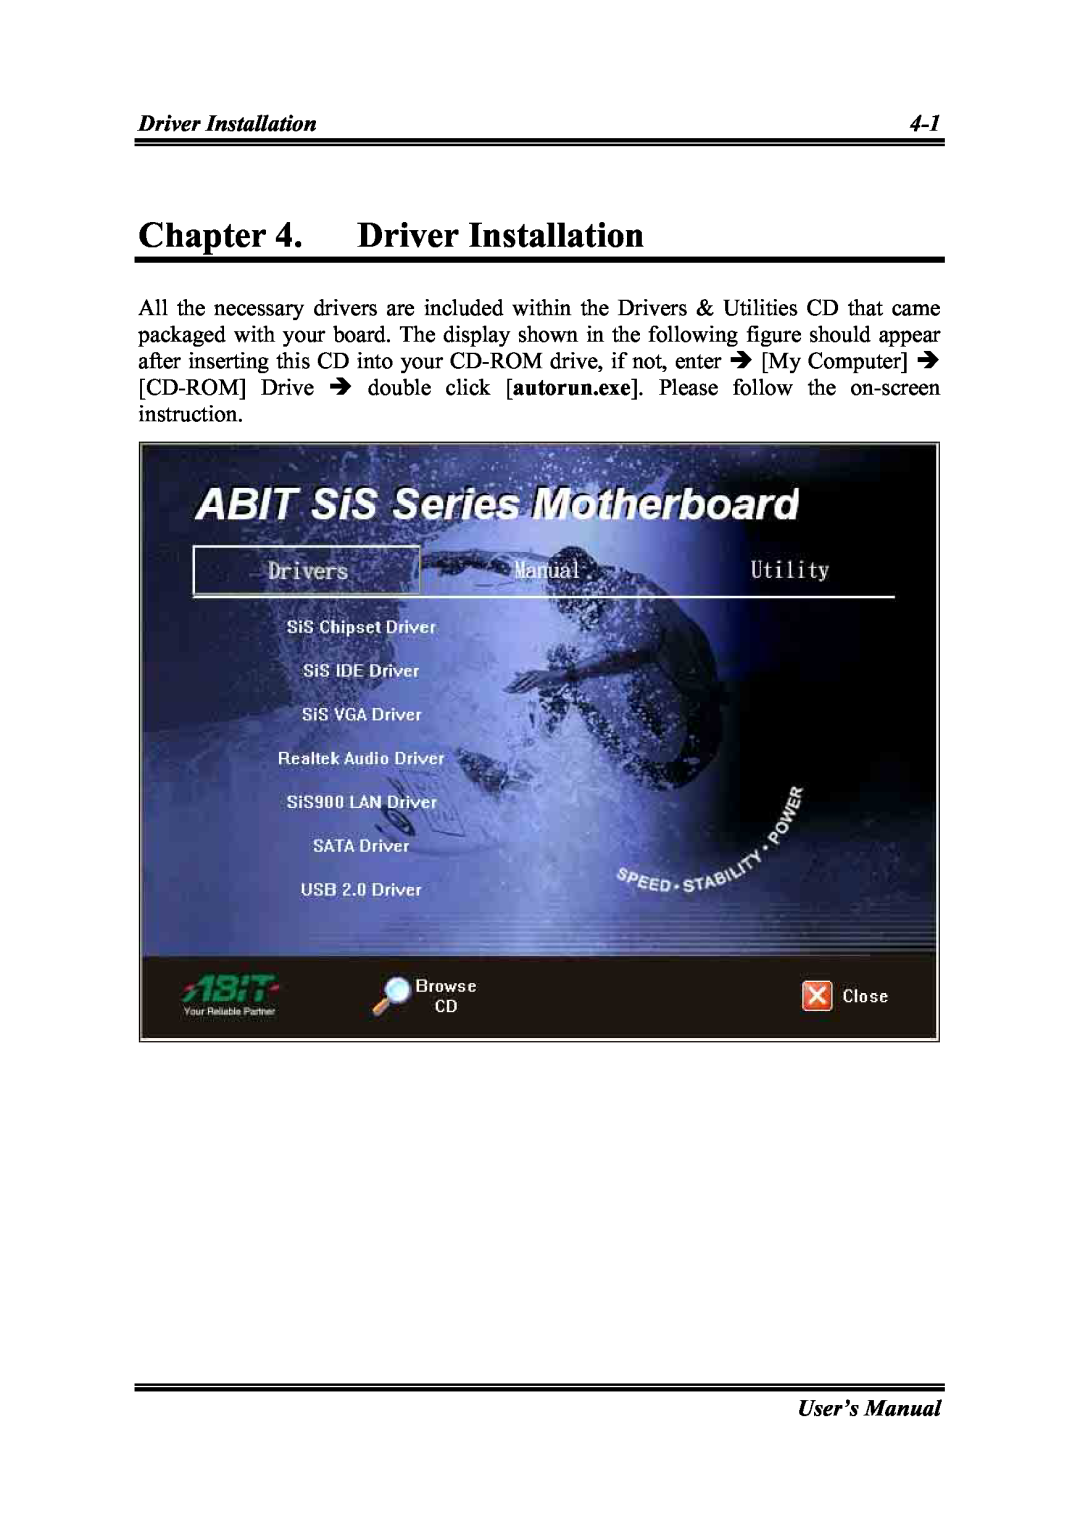 Intel SG-81, SG-80 user manual Driver Installation, User’s Manual 